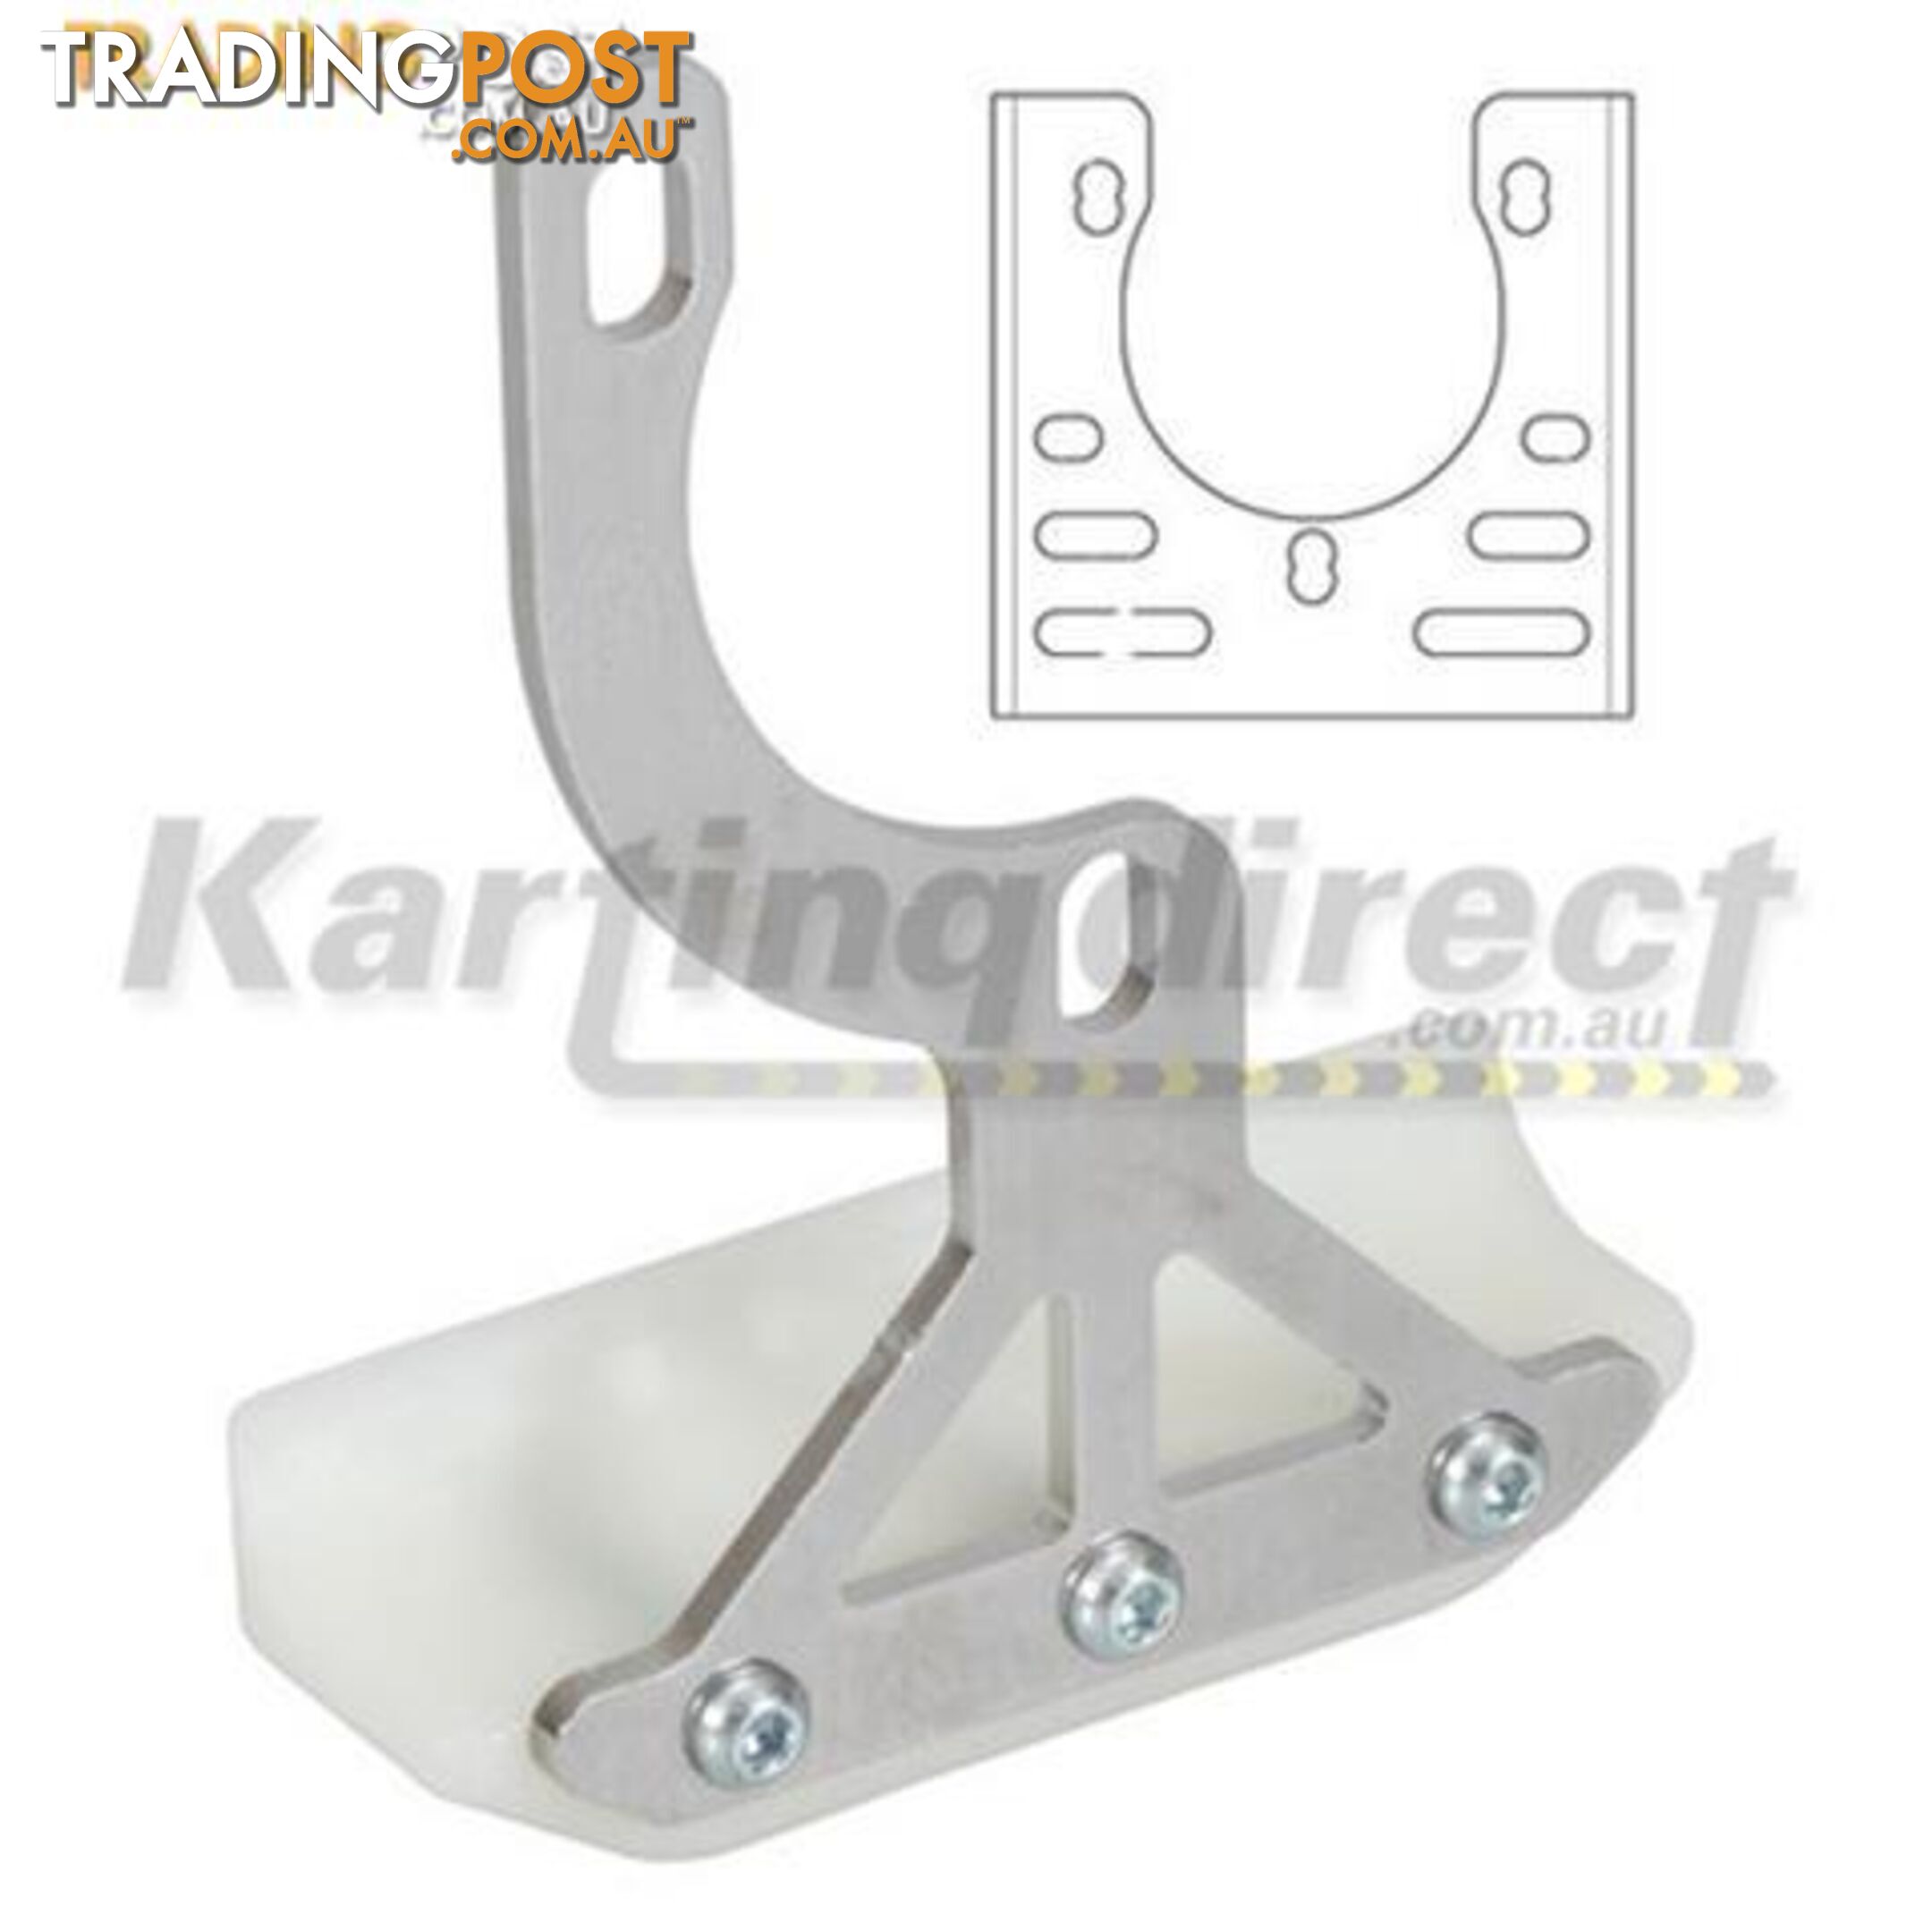 Go Kart Frame Slider Protector. Bolts to the bearing hanger to protect sprocket side or brake disc - ALL BRAND NEW !!!